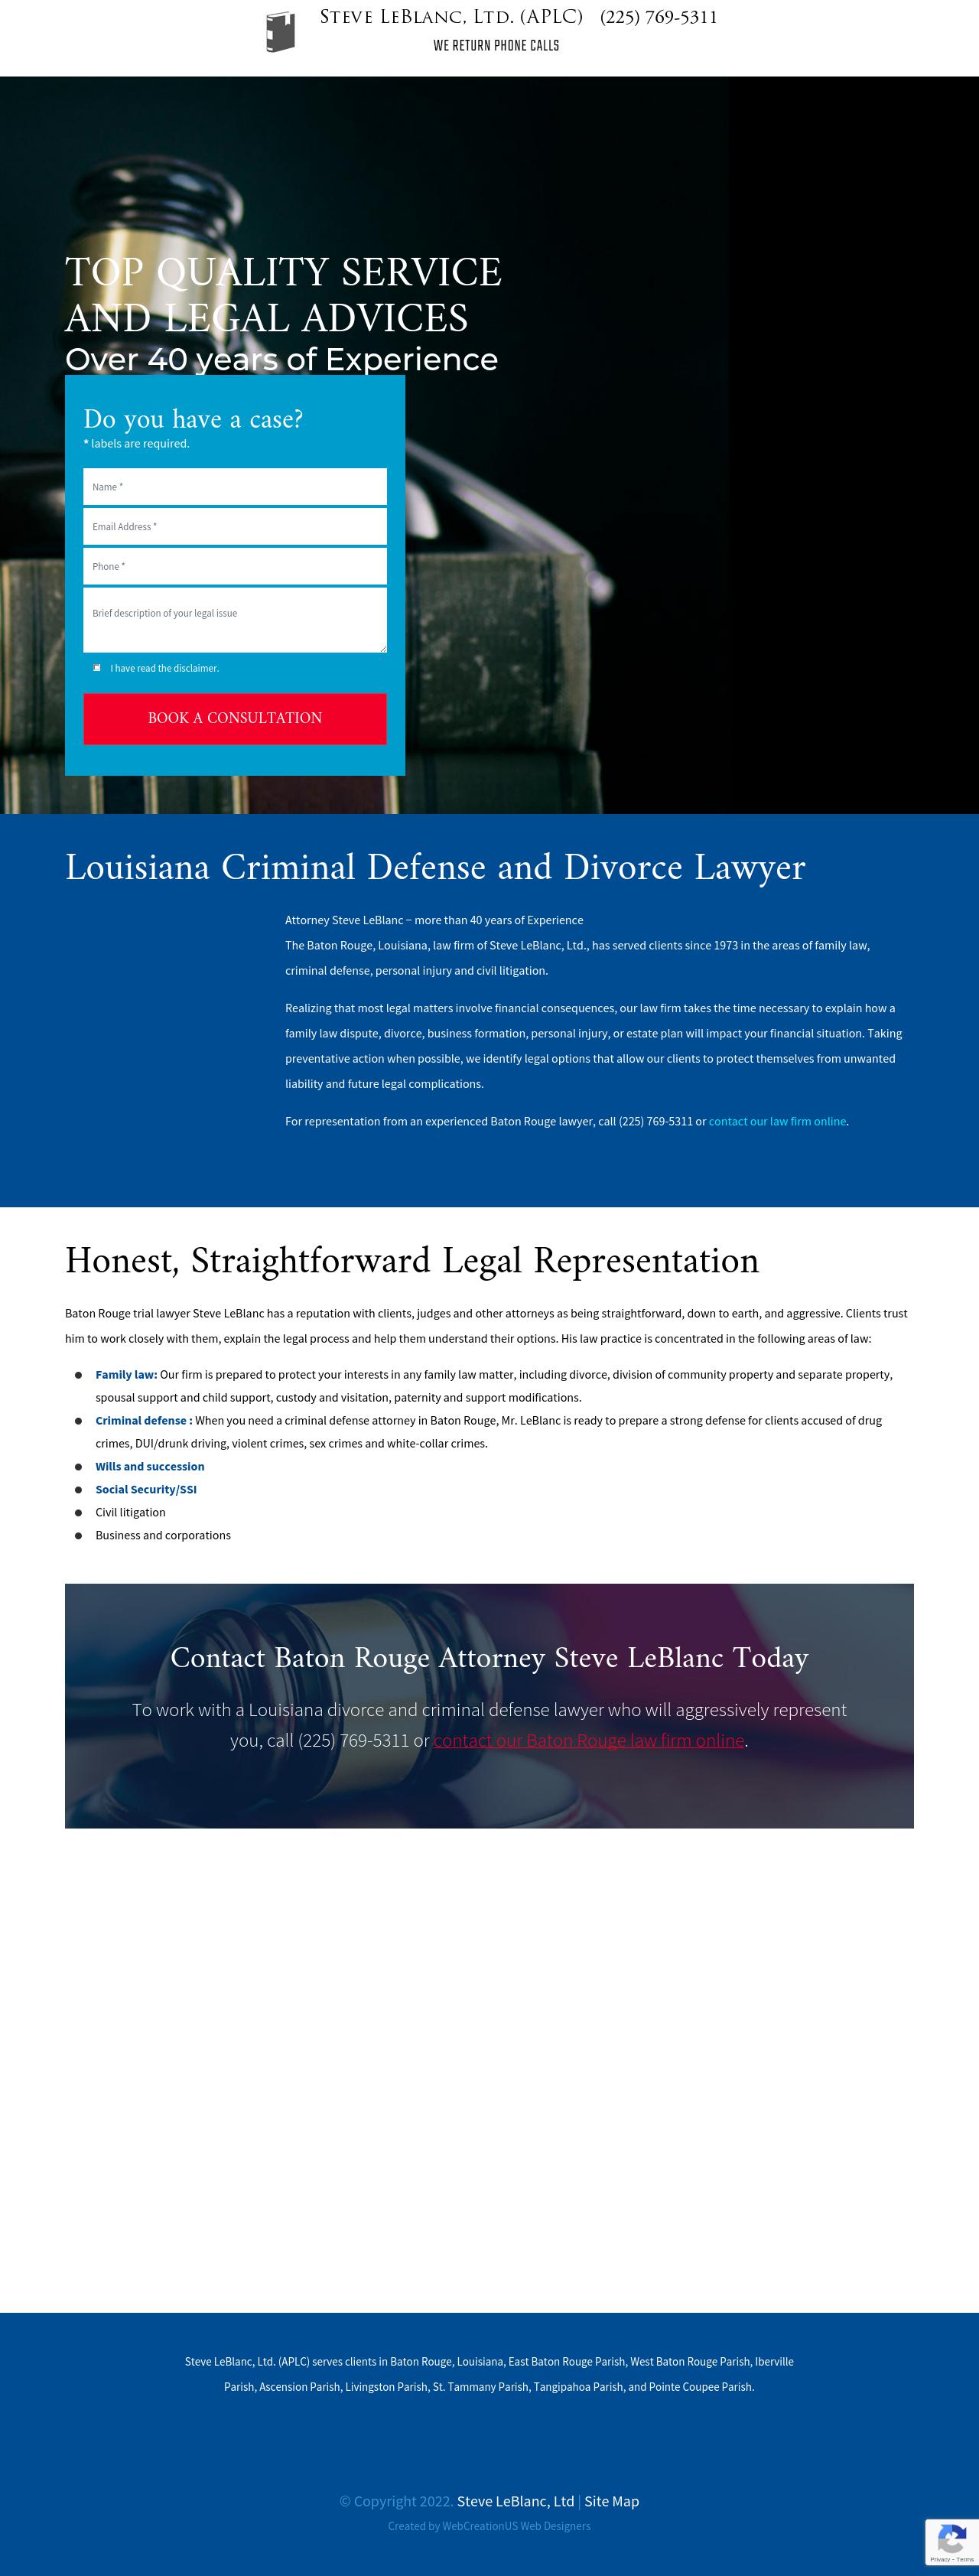 LeBlanc, Steve - Baton Rouge LA Lawyers